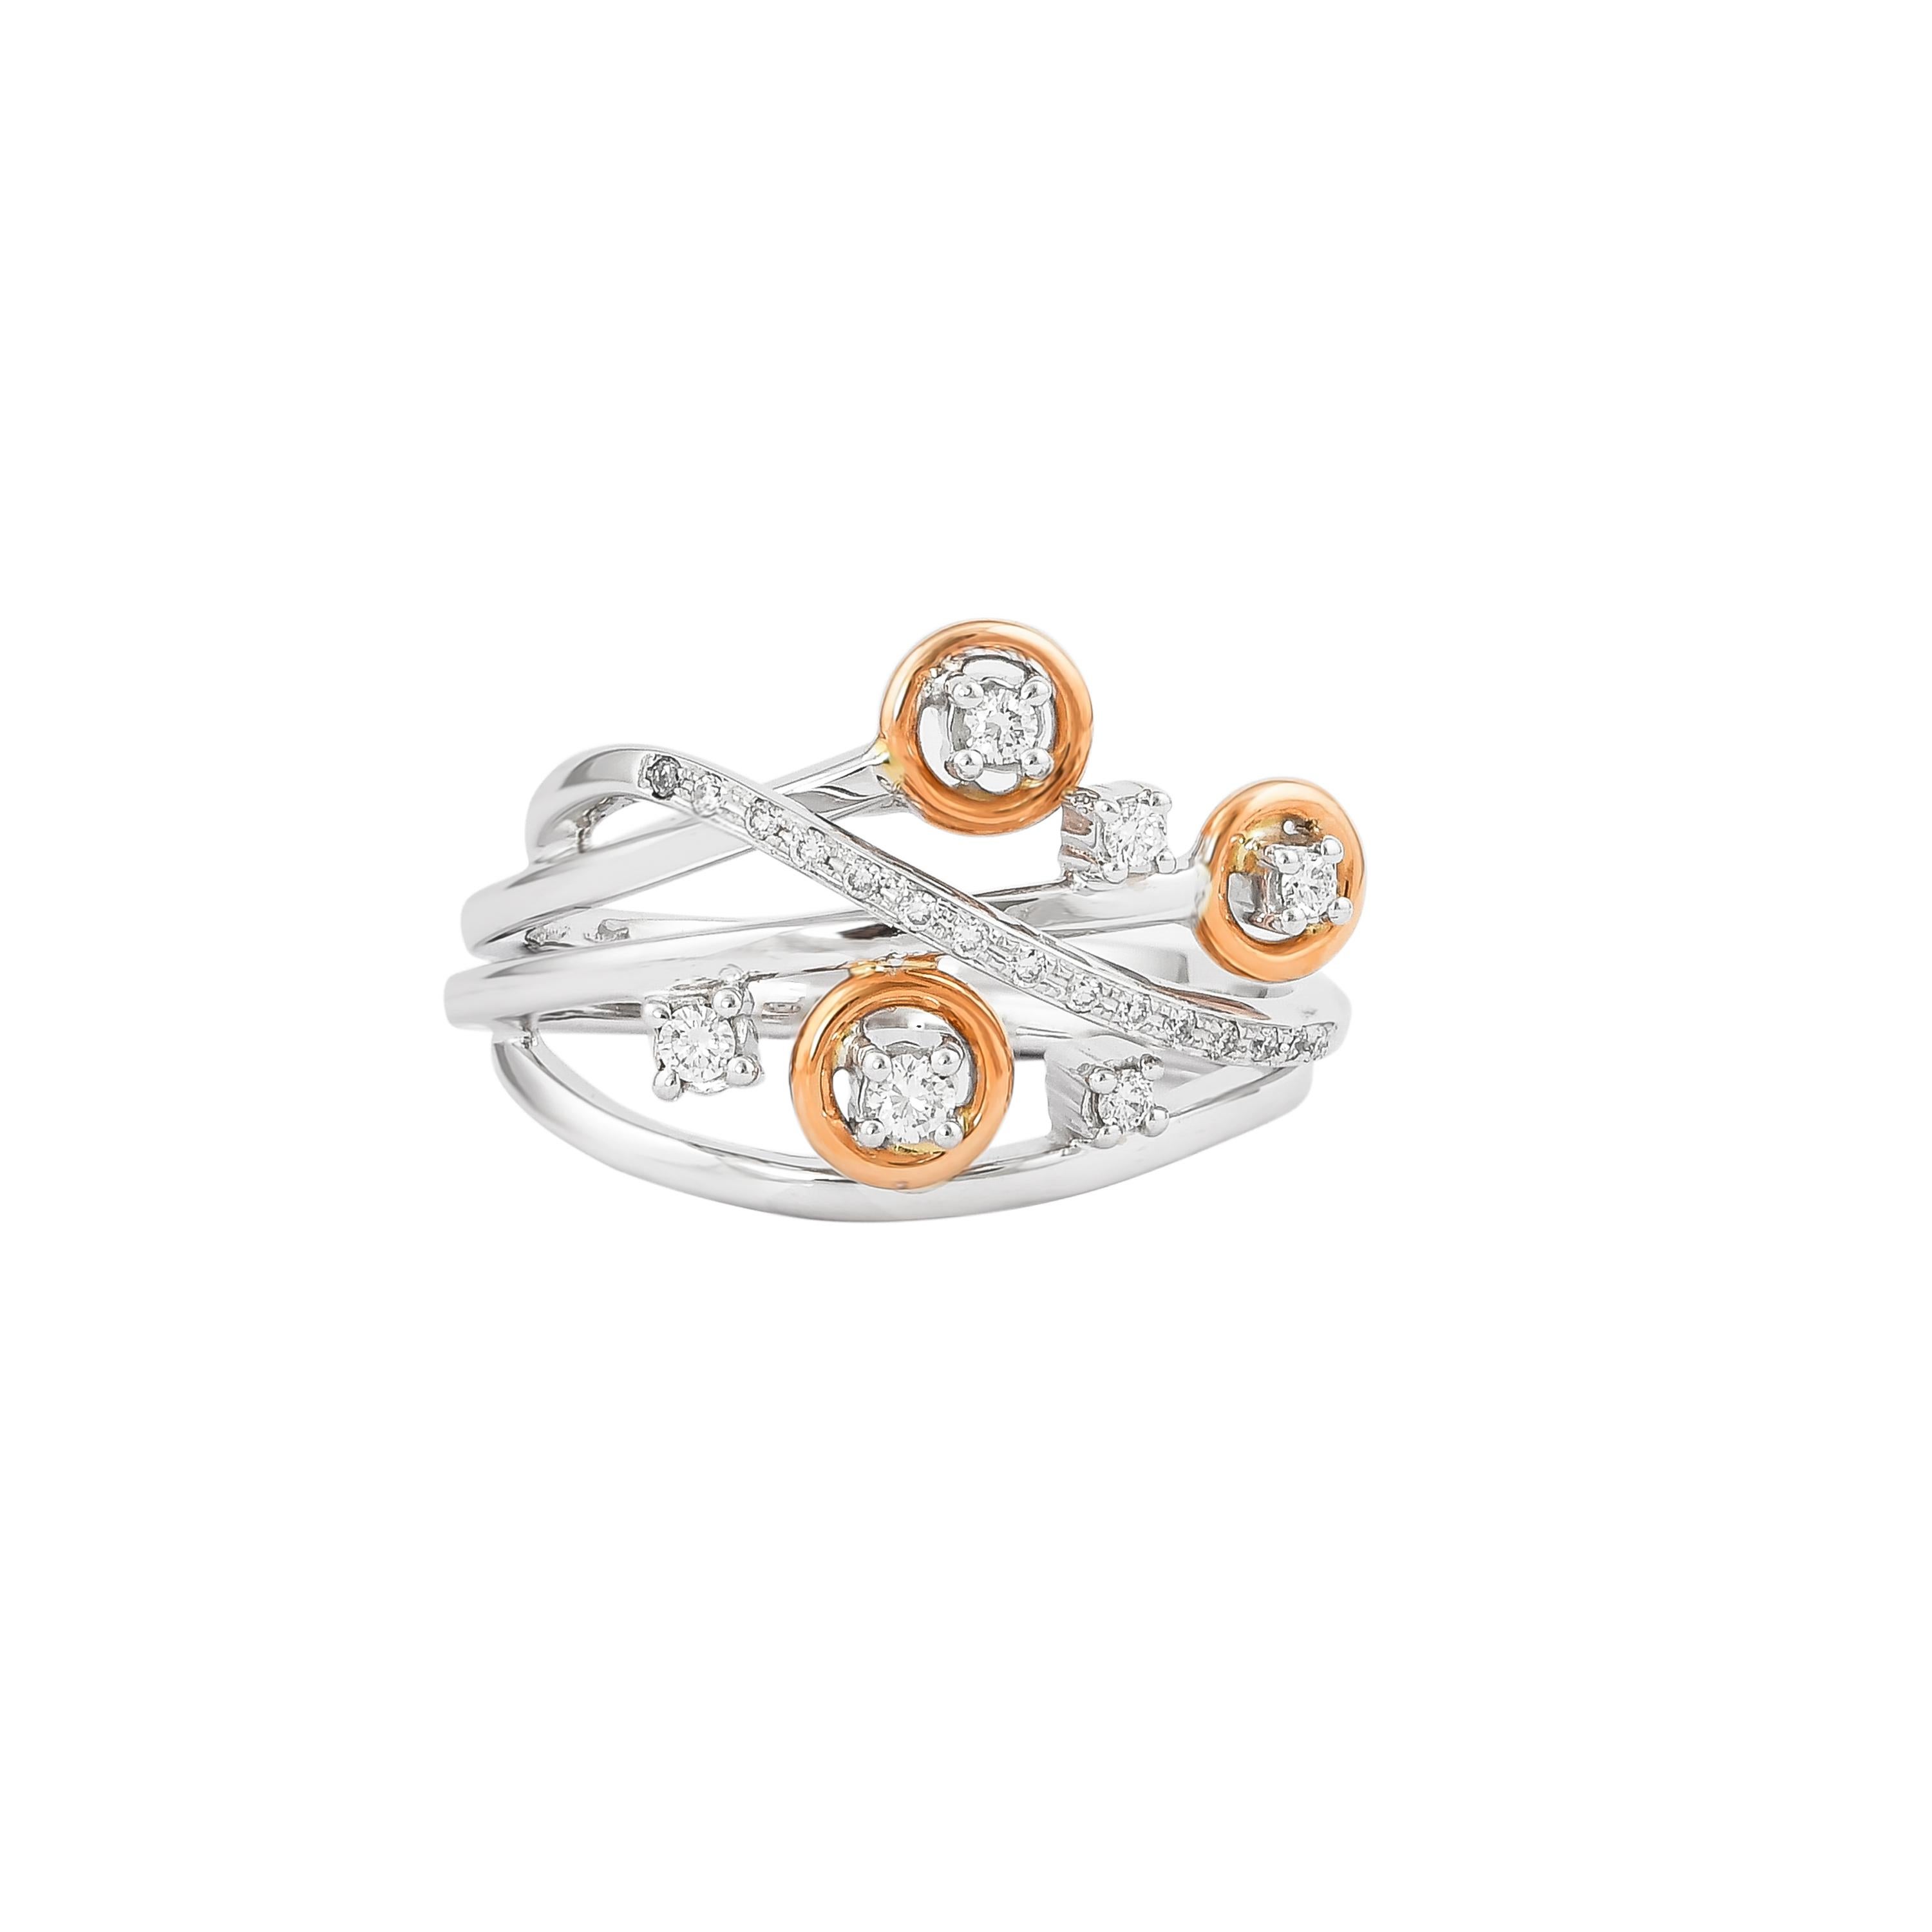 Contemporary 0.177 Carat Diamond Ring in 18 Karat White & Rose Gold For Sale